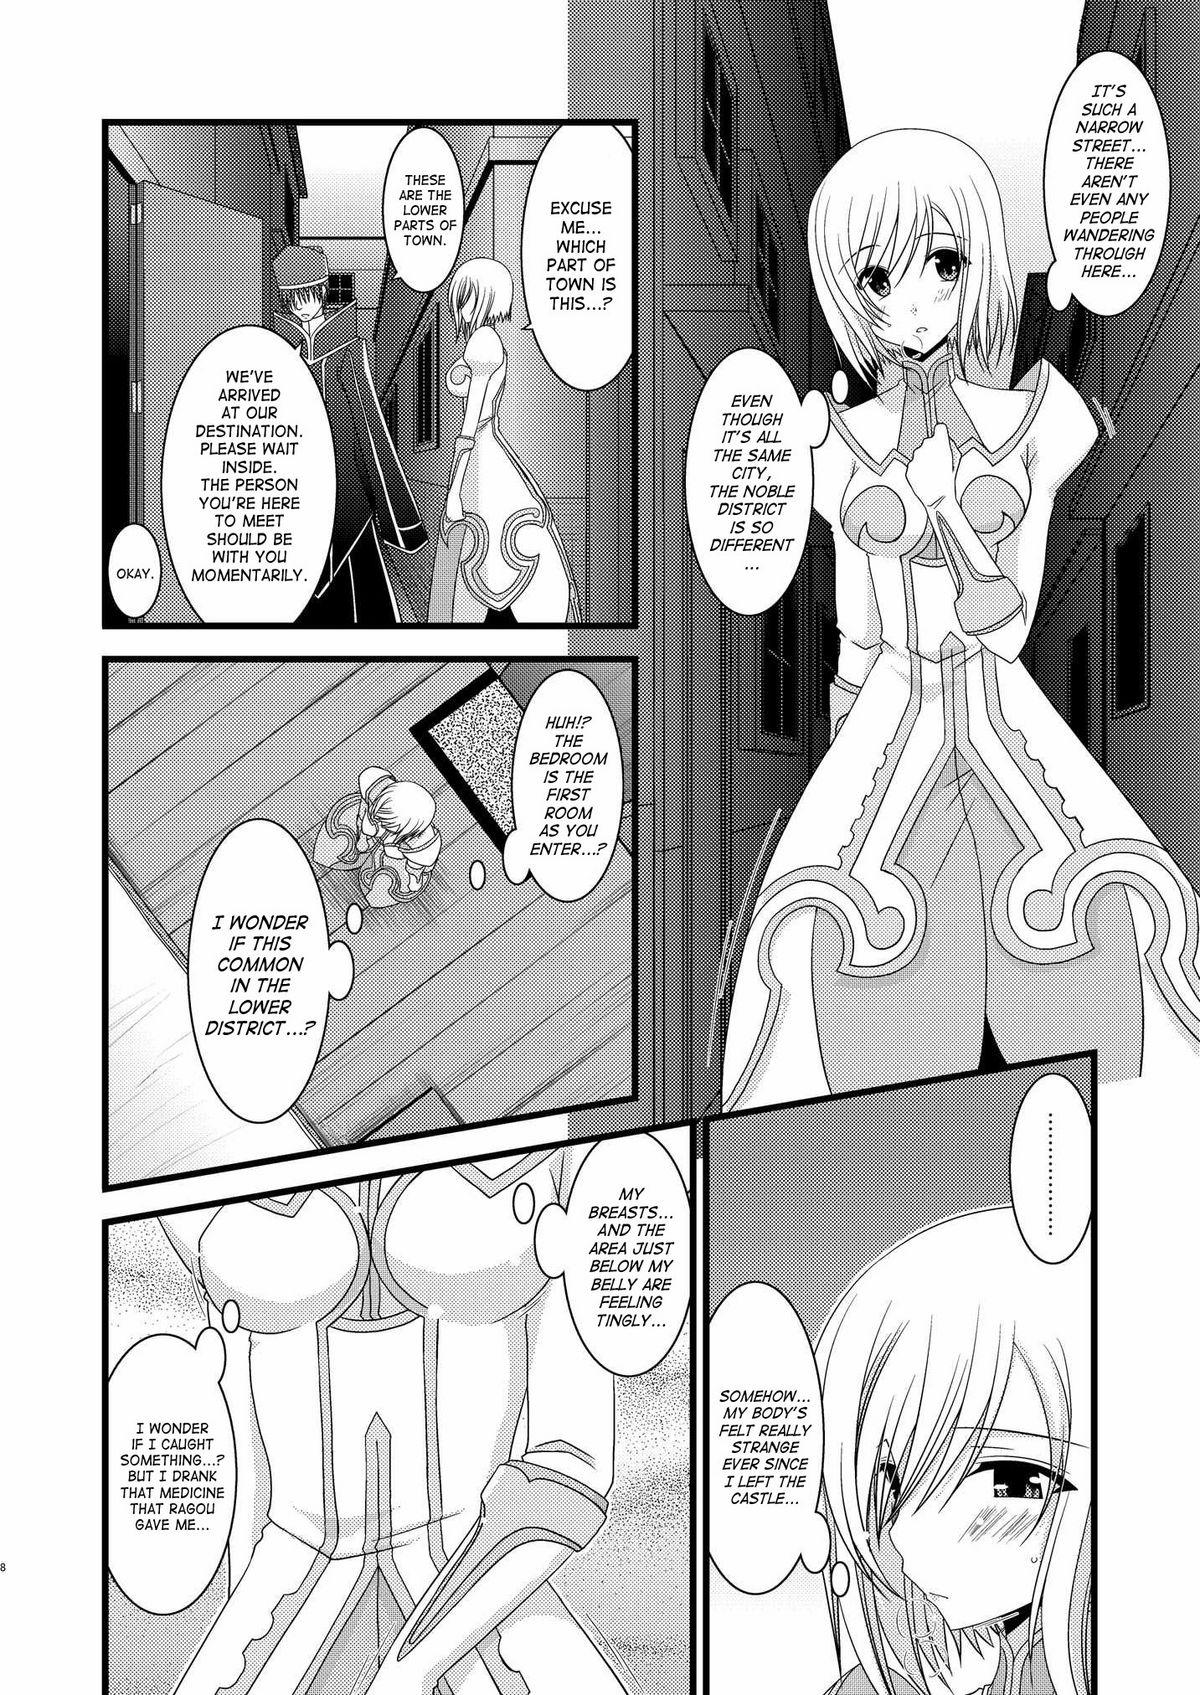 Pussysex Mangetsu San Tan | Full Moon Scattered Tale - Tales of vesperia Camgirl - Page 7